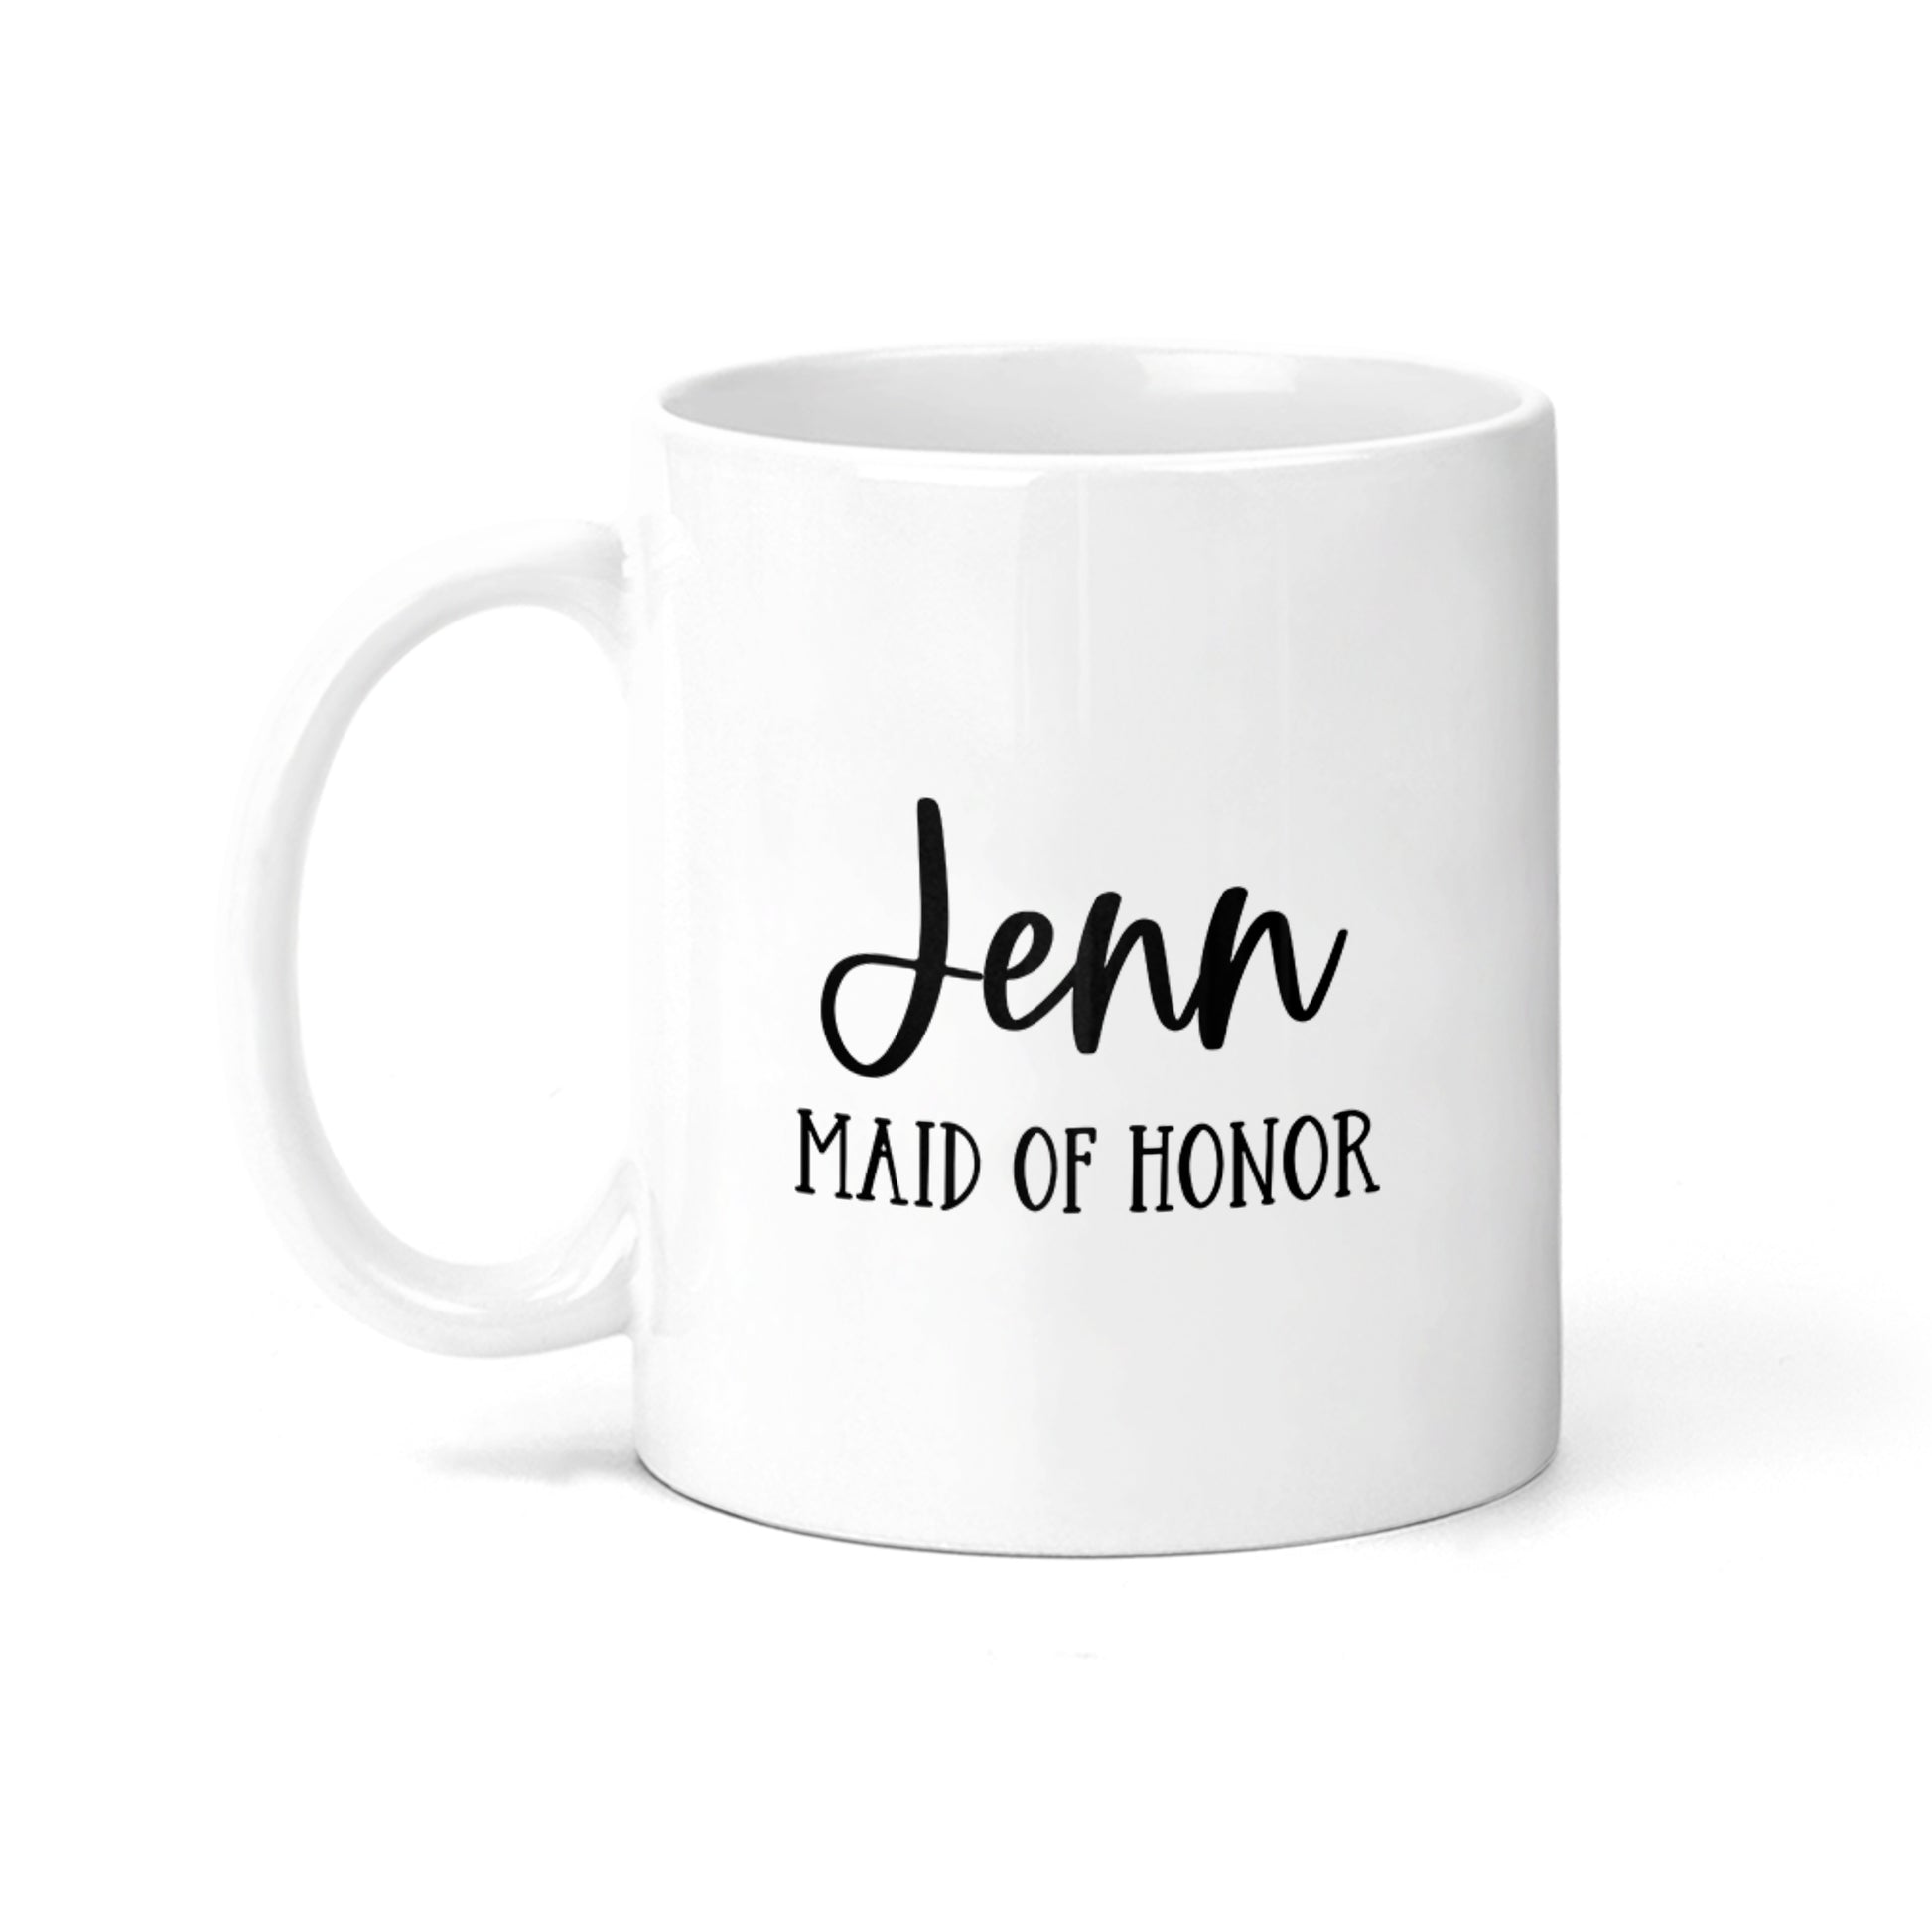 Personalized Maid of Honor Coffee Mug - M0532